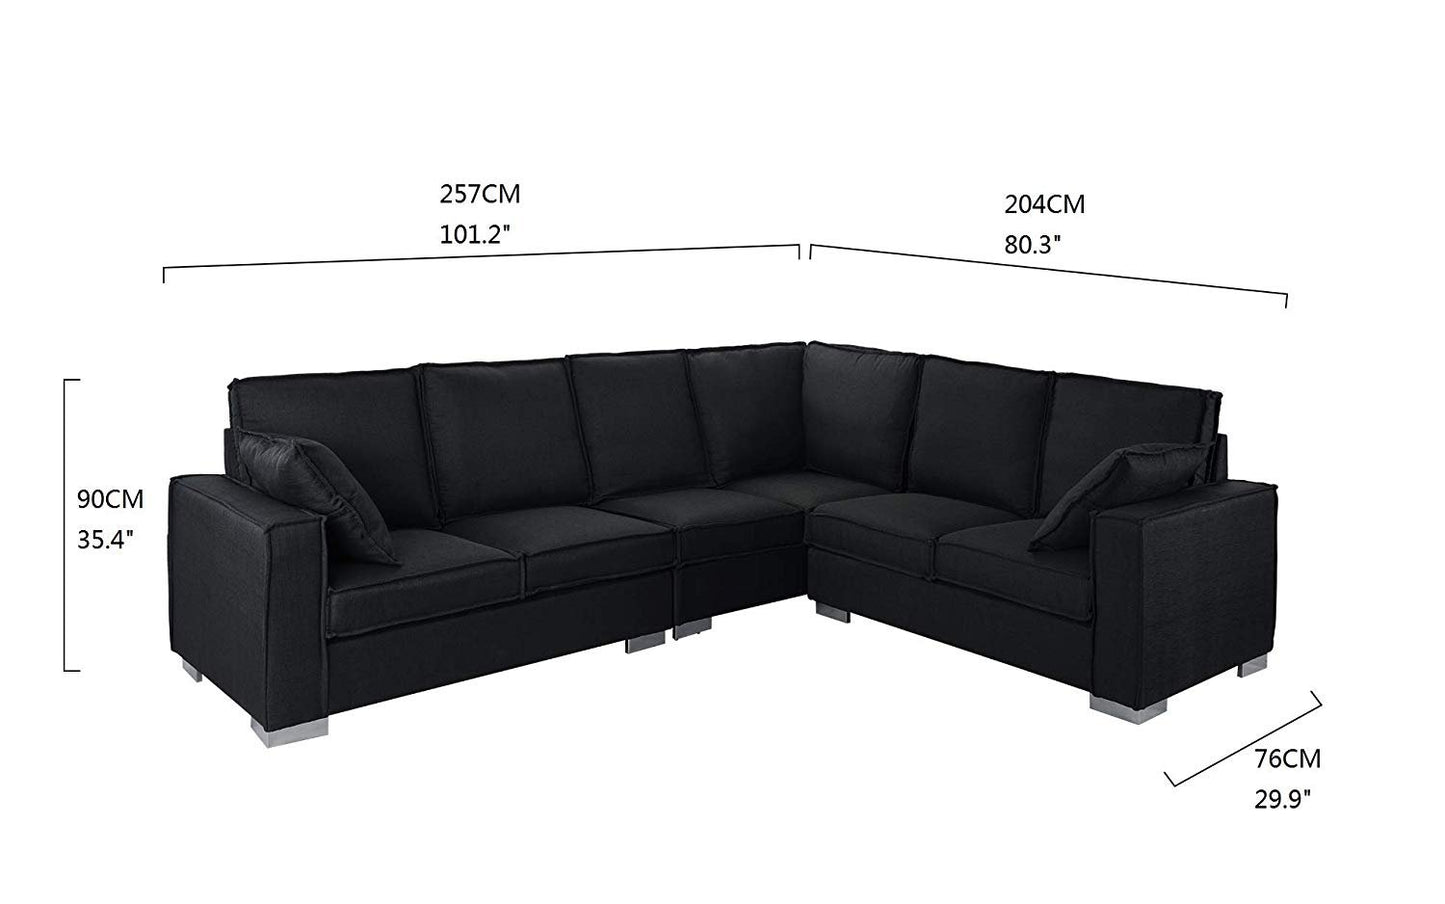 TITAN 6 Seater Large Living Room Fabric L-Shape Sectional Sofa